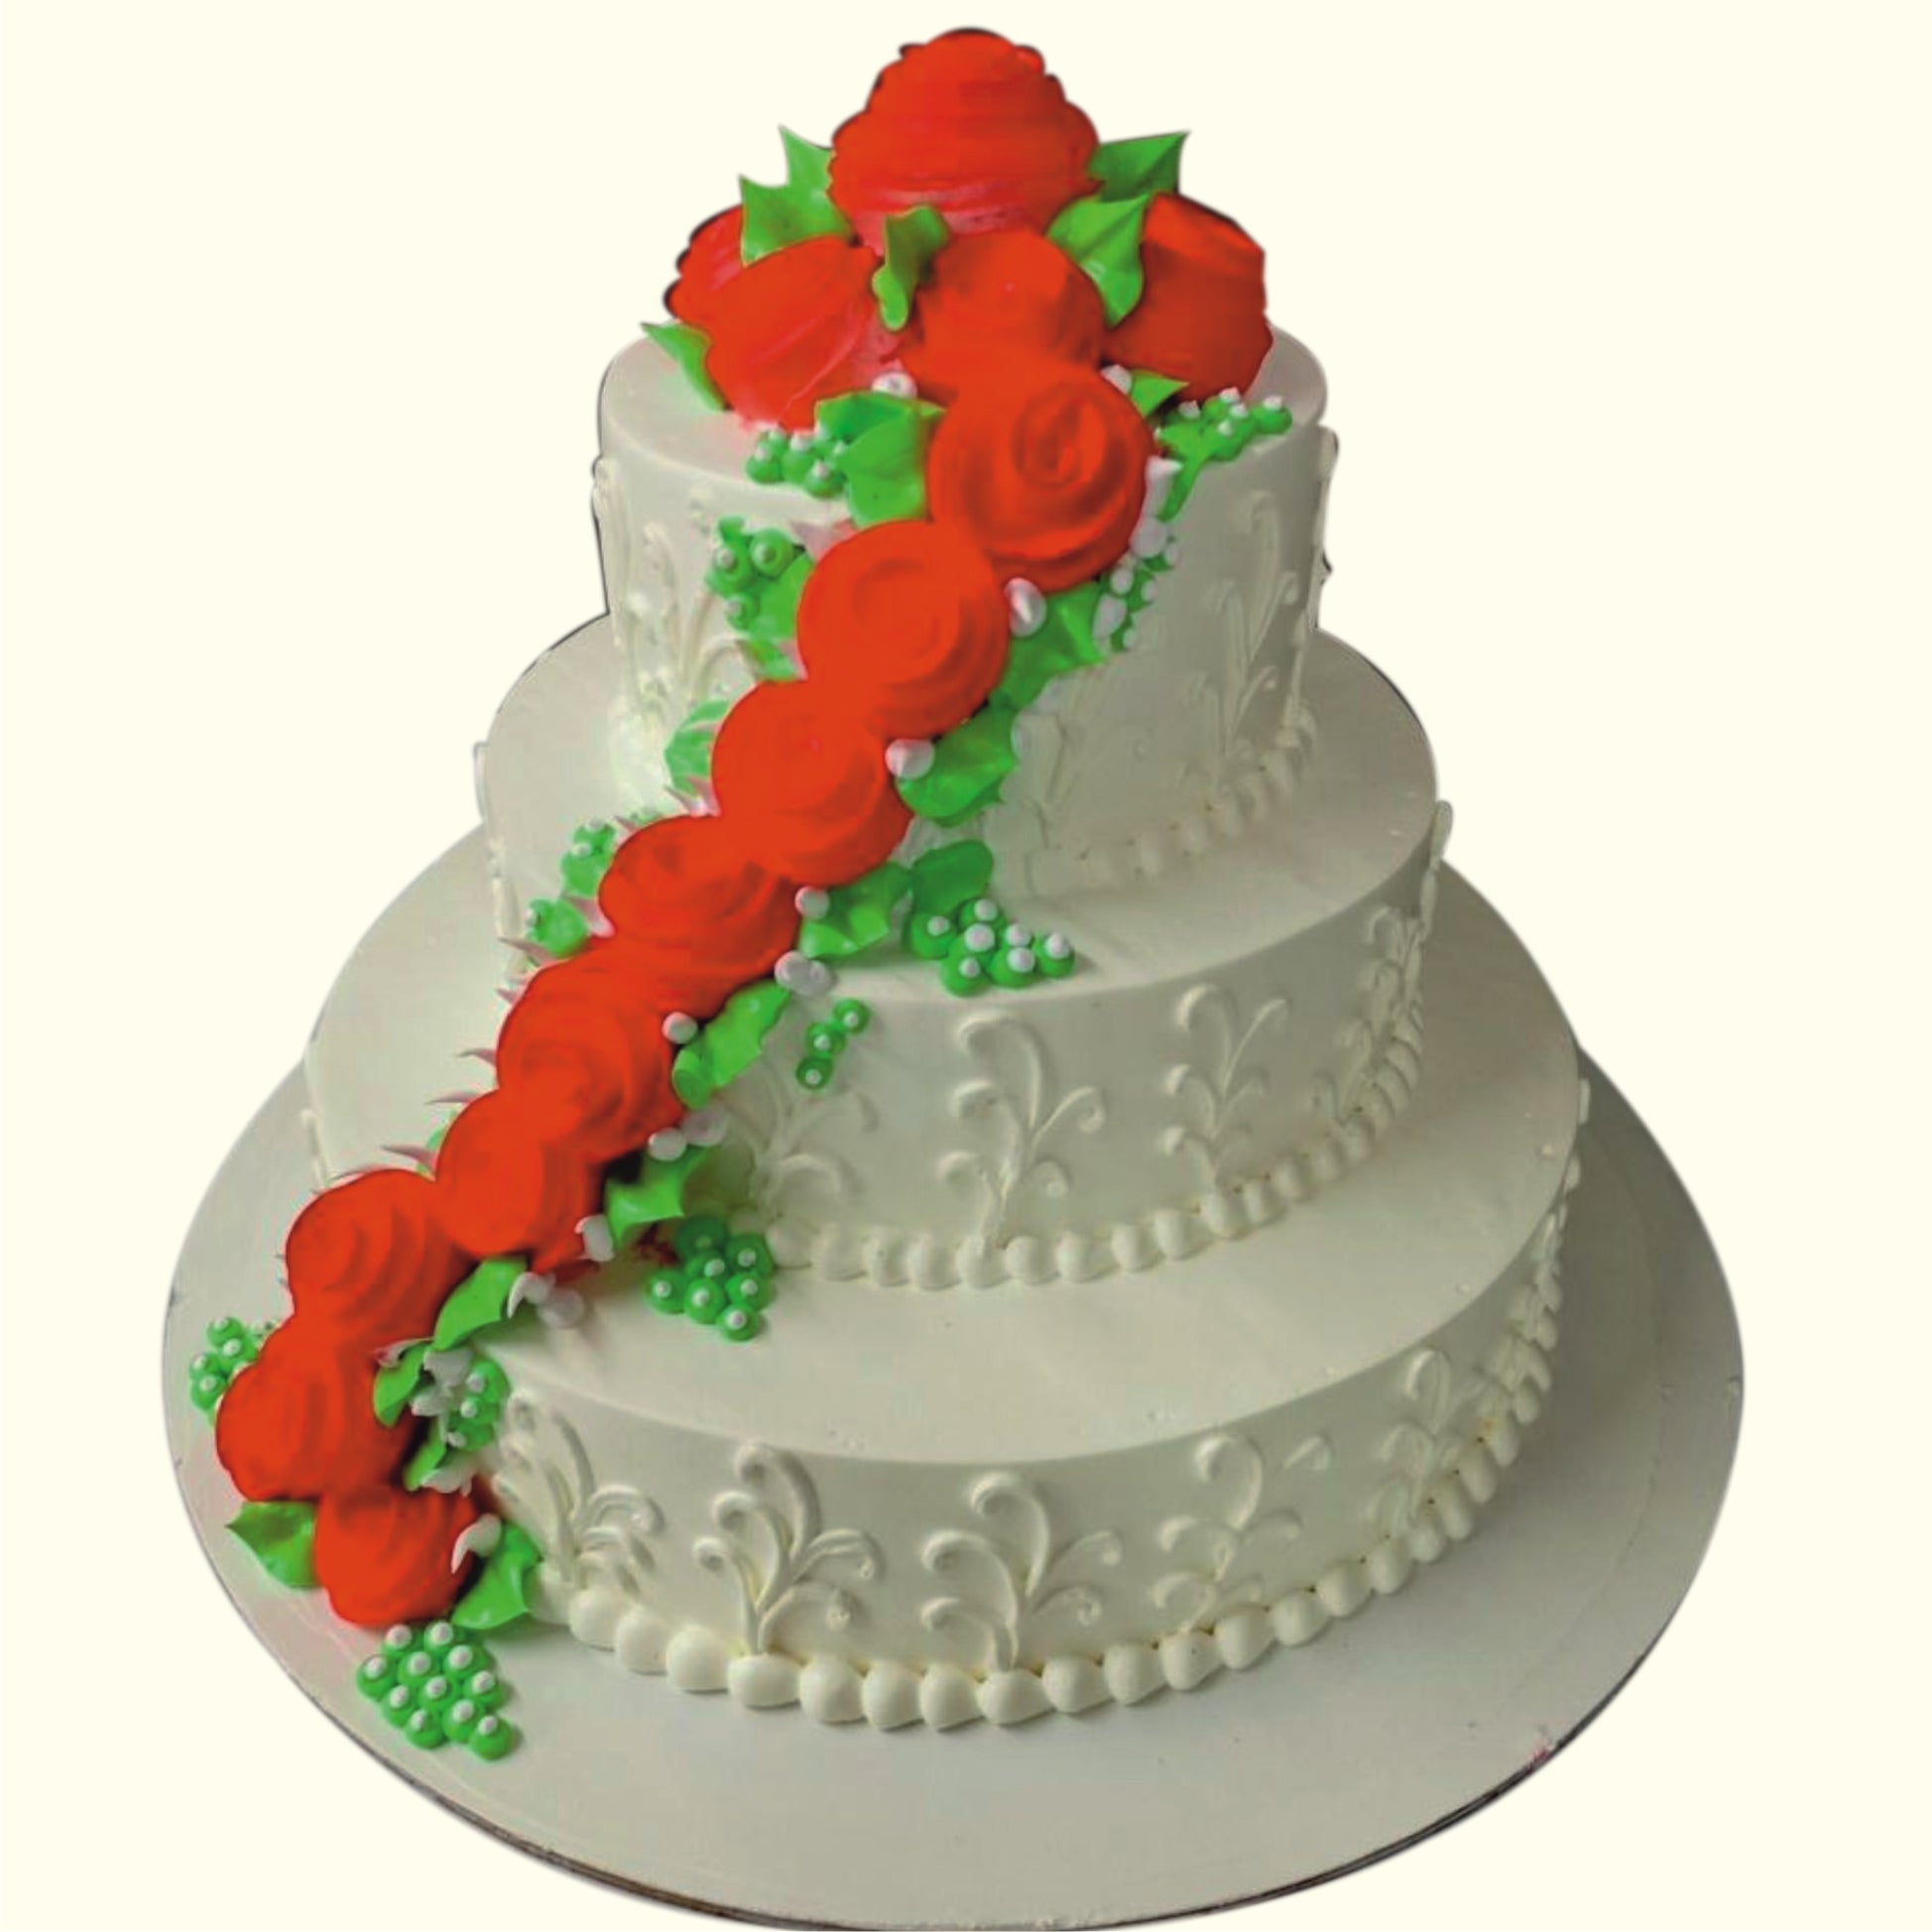 Buy Teddy Rose Theme Fondant Cake Online in Delhi NCR : Fondant Cake Studio